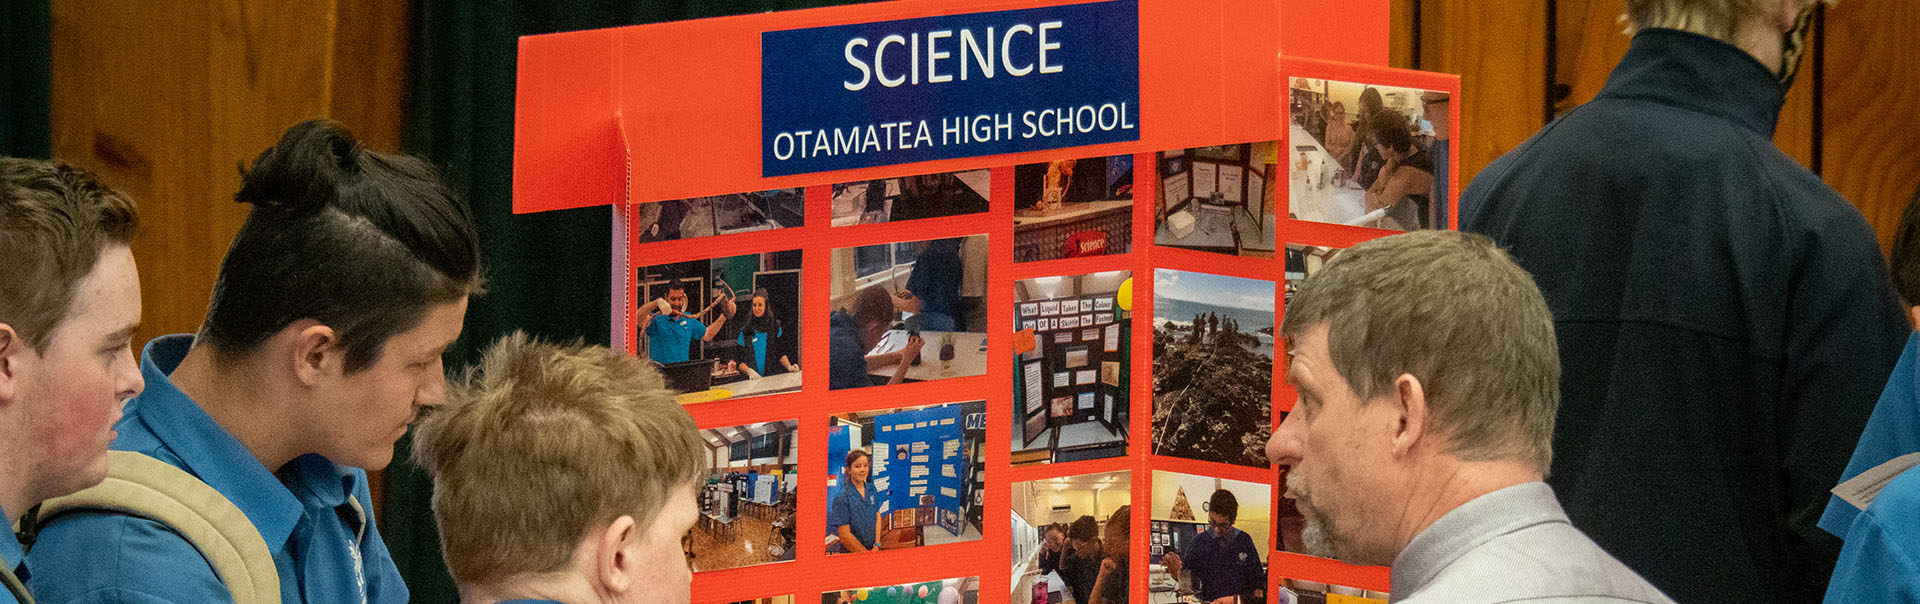 Options Expo at Otamatea High School